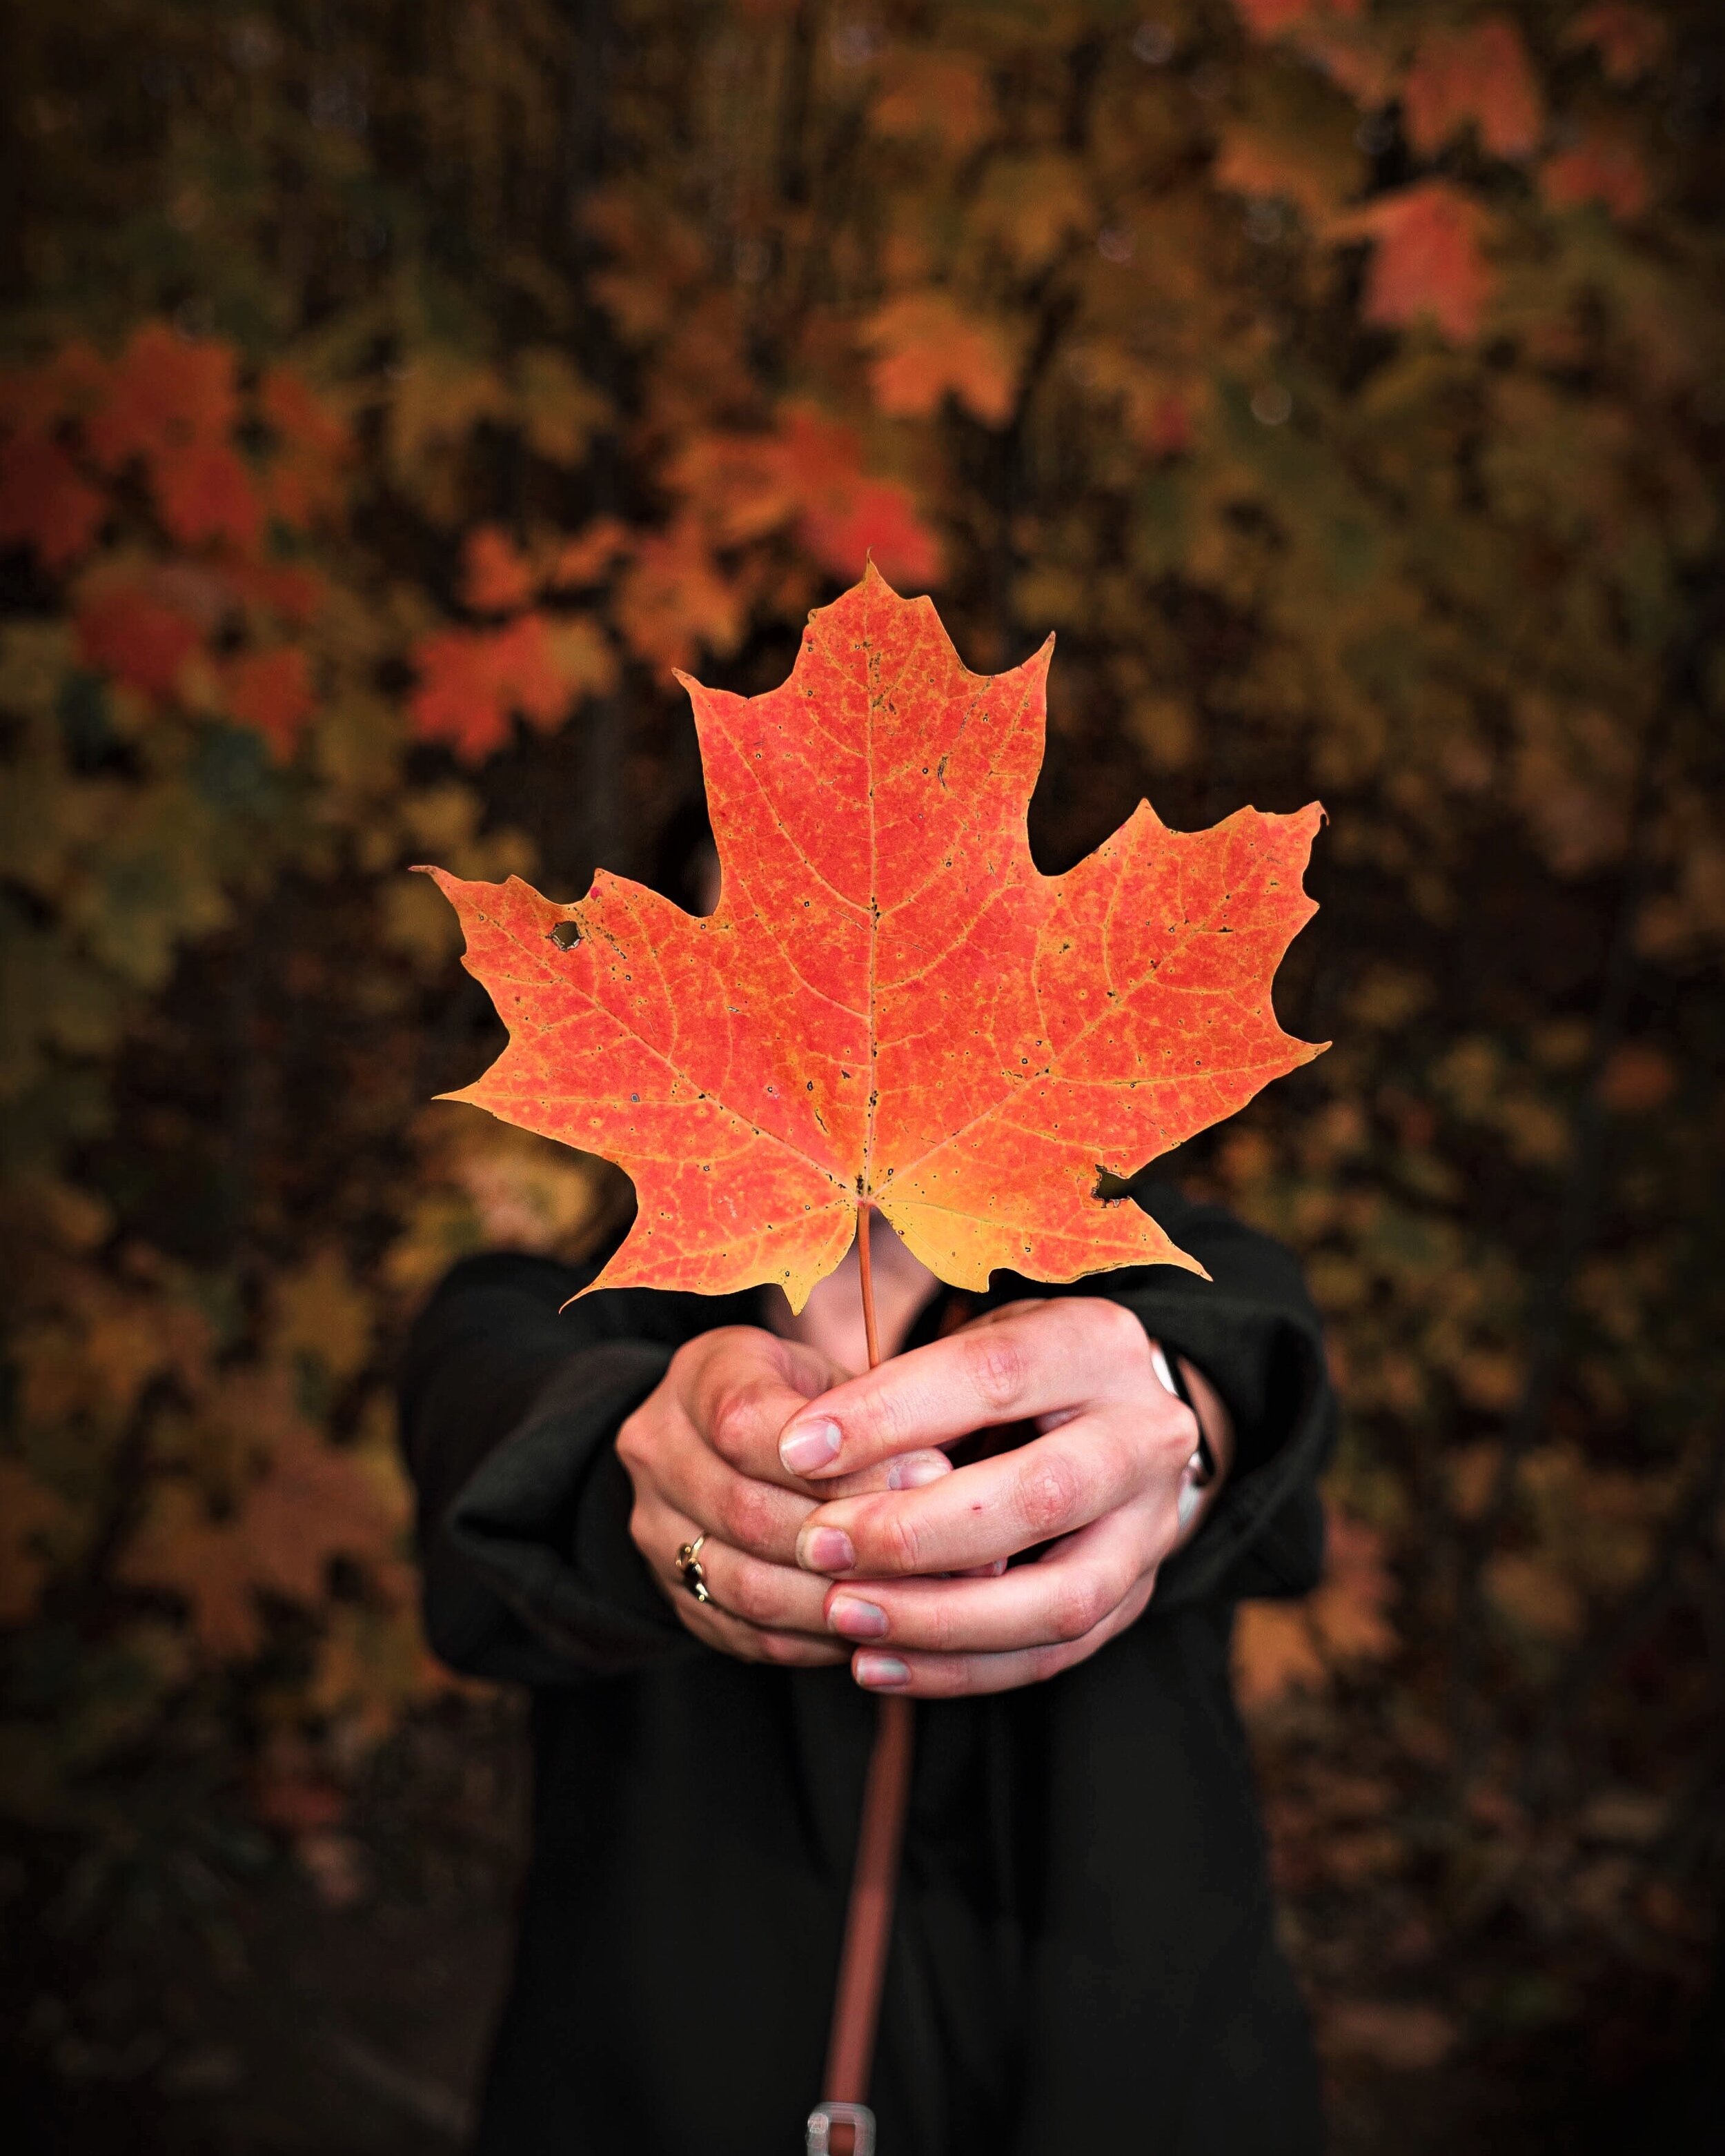 The maple leaf symbol of Canada